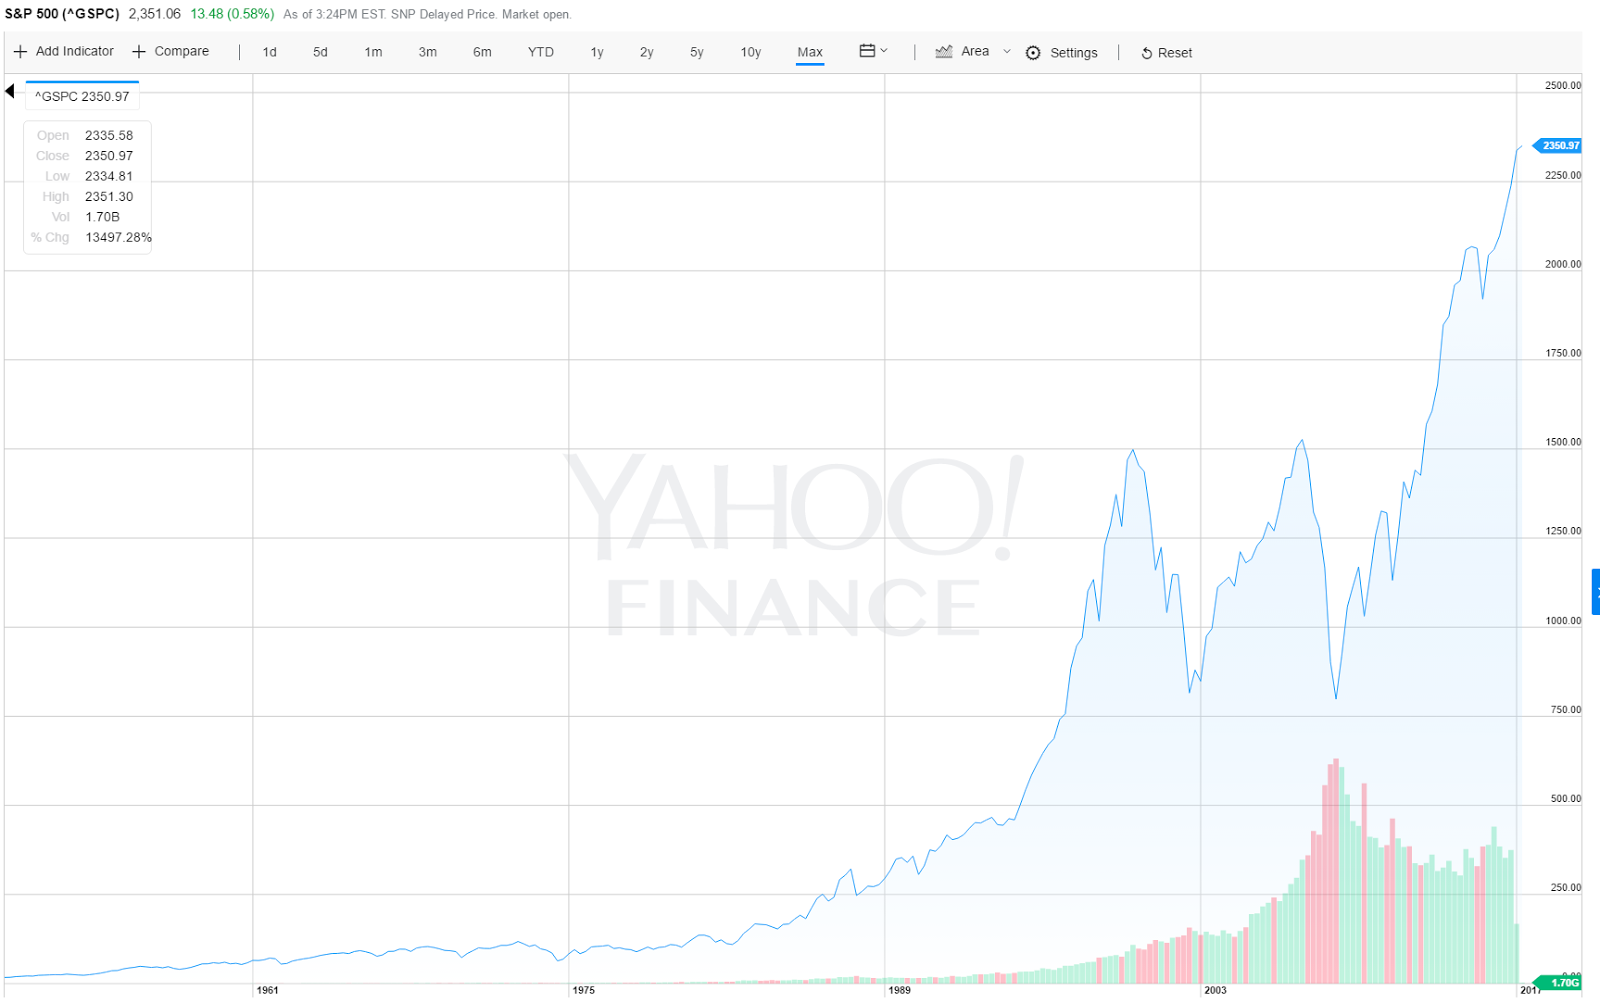 Vix Index Chart Yahoo Finance